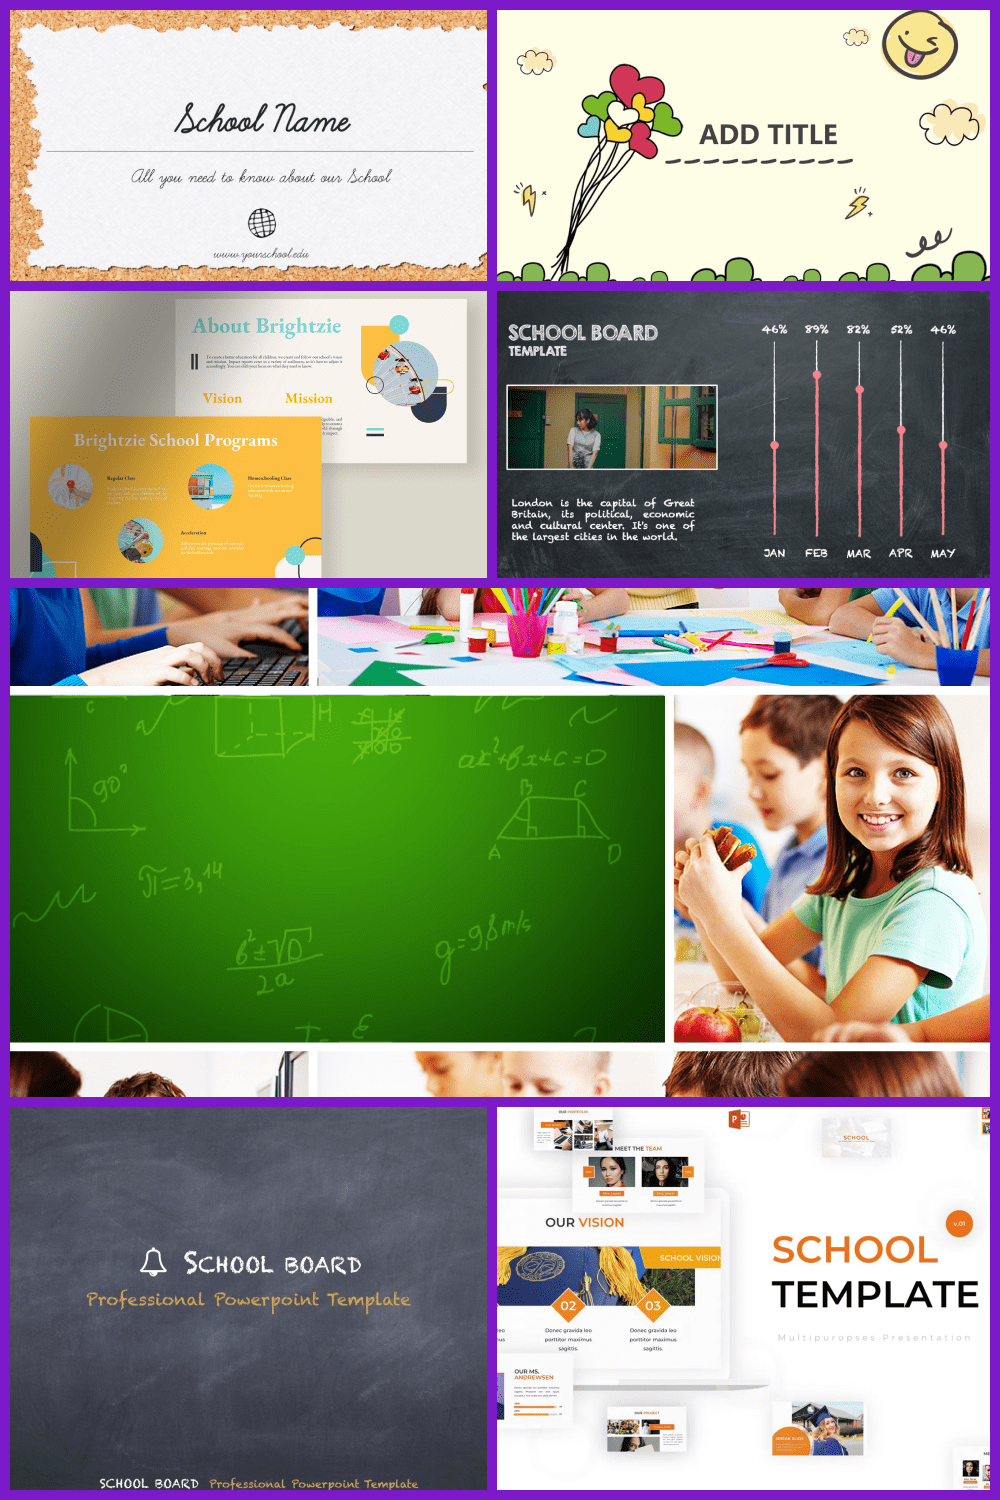 PowerPoint Templates for School - Pinterest.